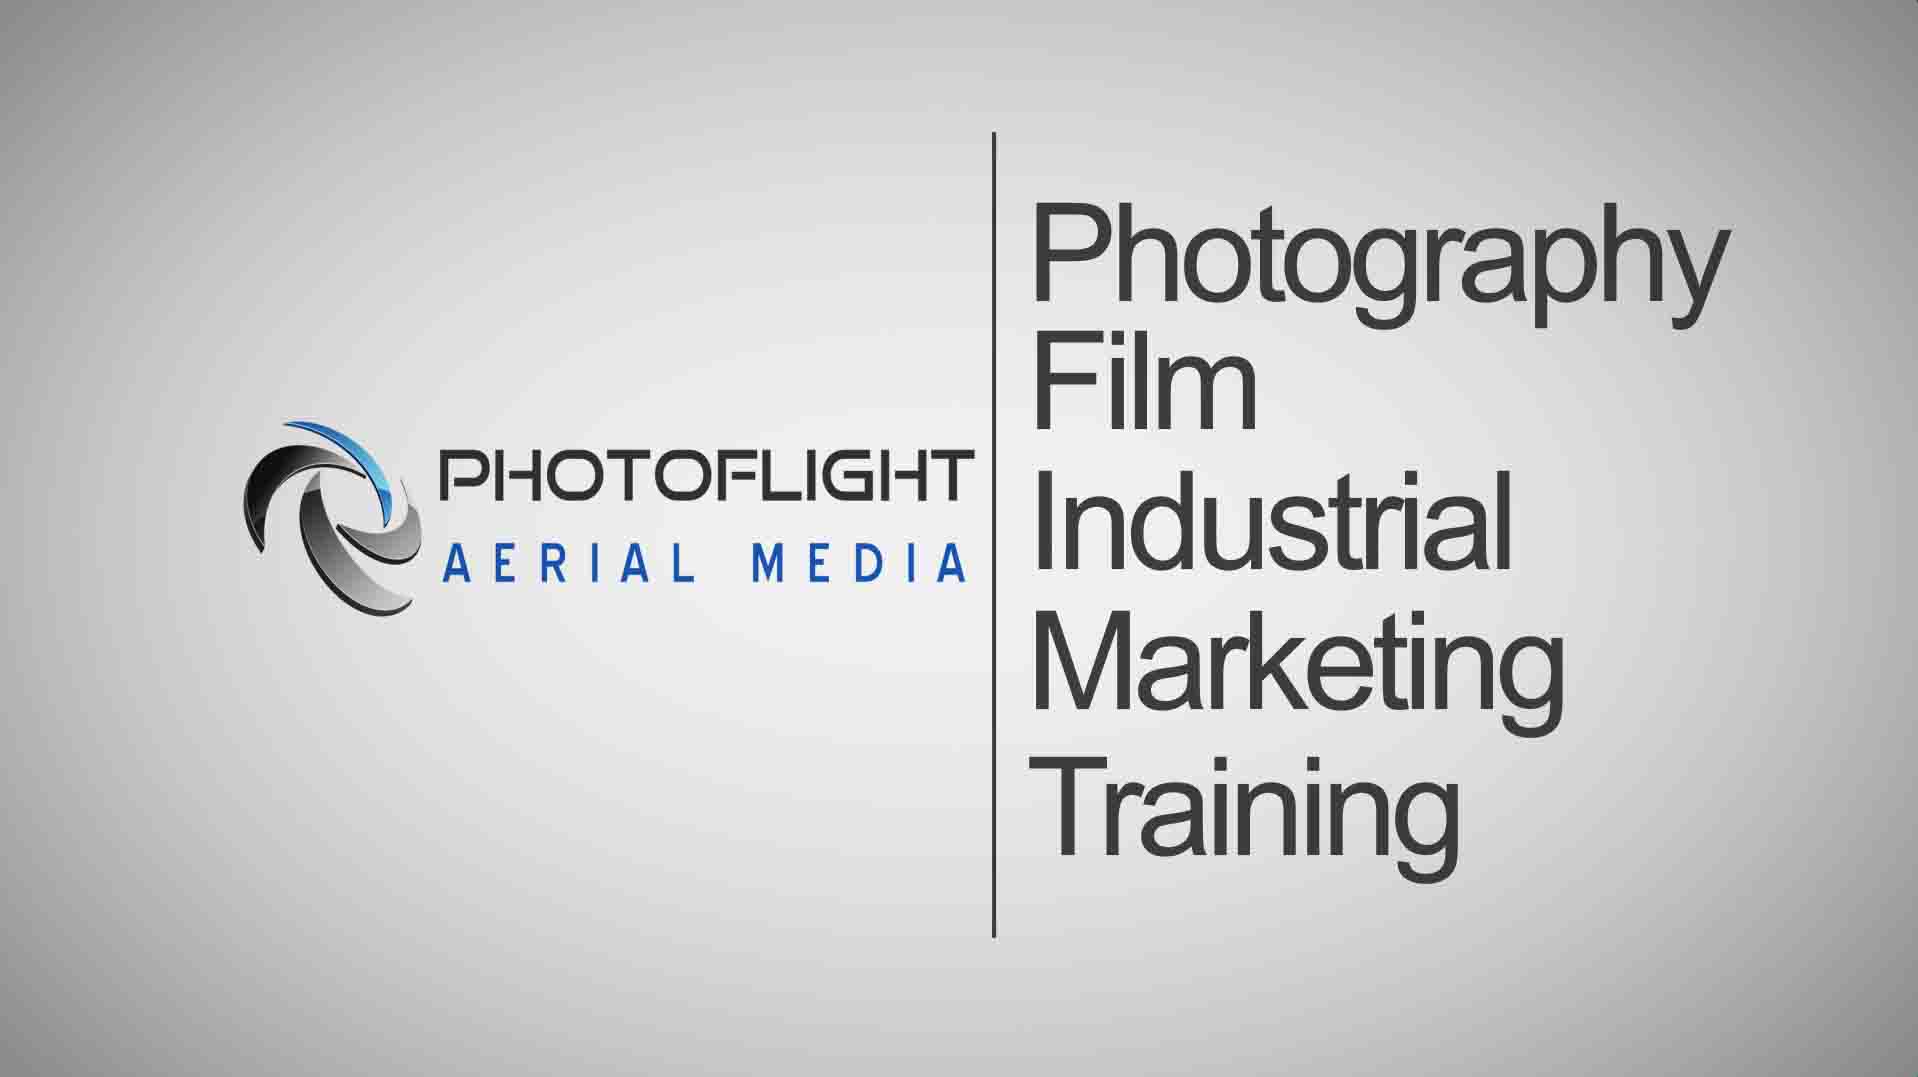 PhotoFlight Aerial Media announces acquisition of Notadrone.com & 500 Feet Drones